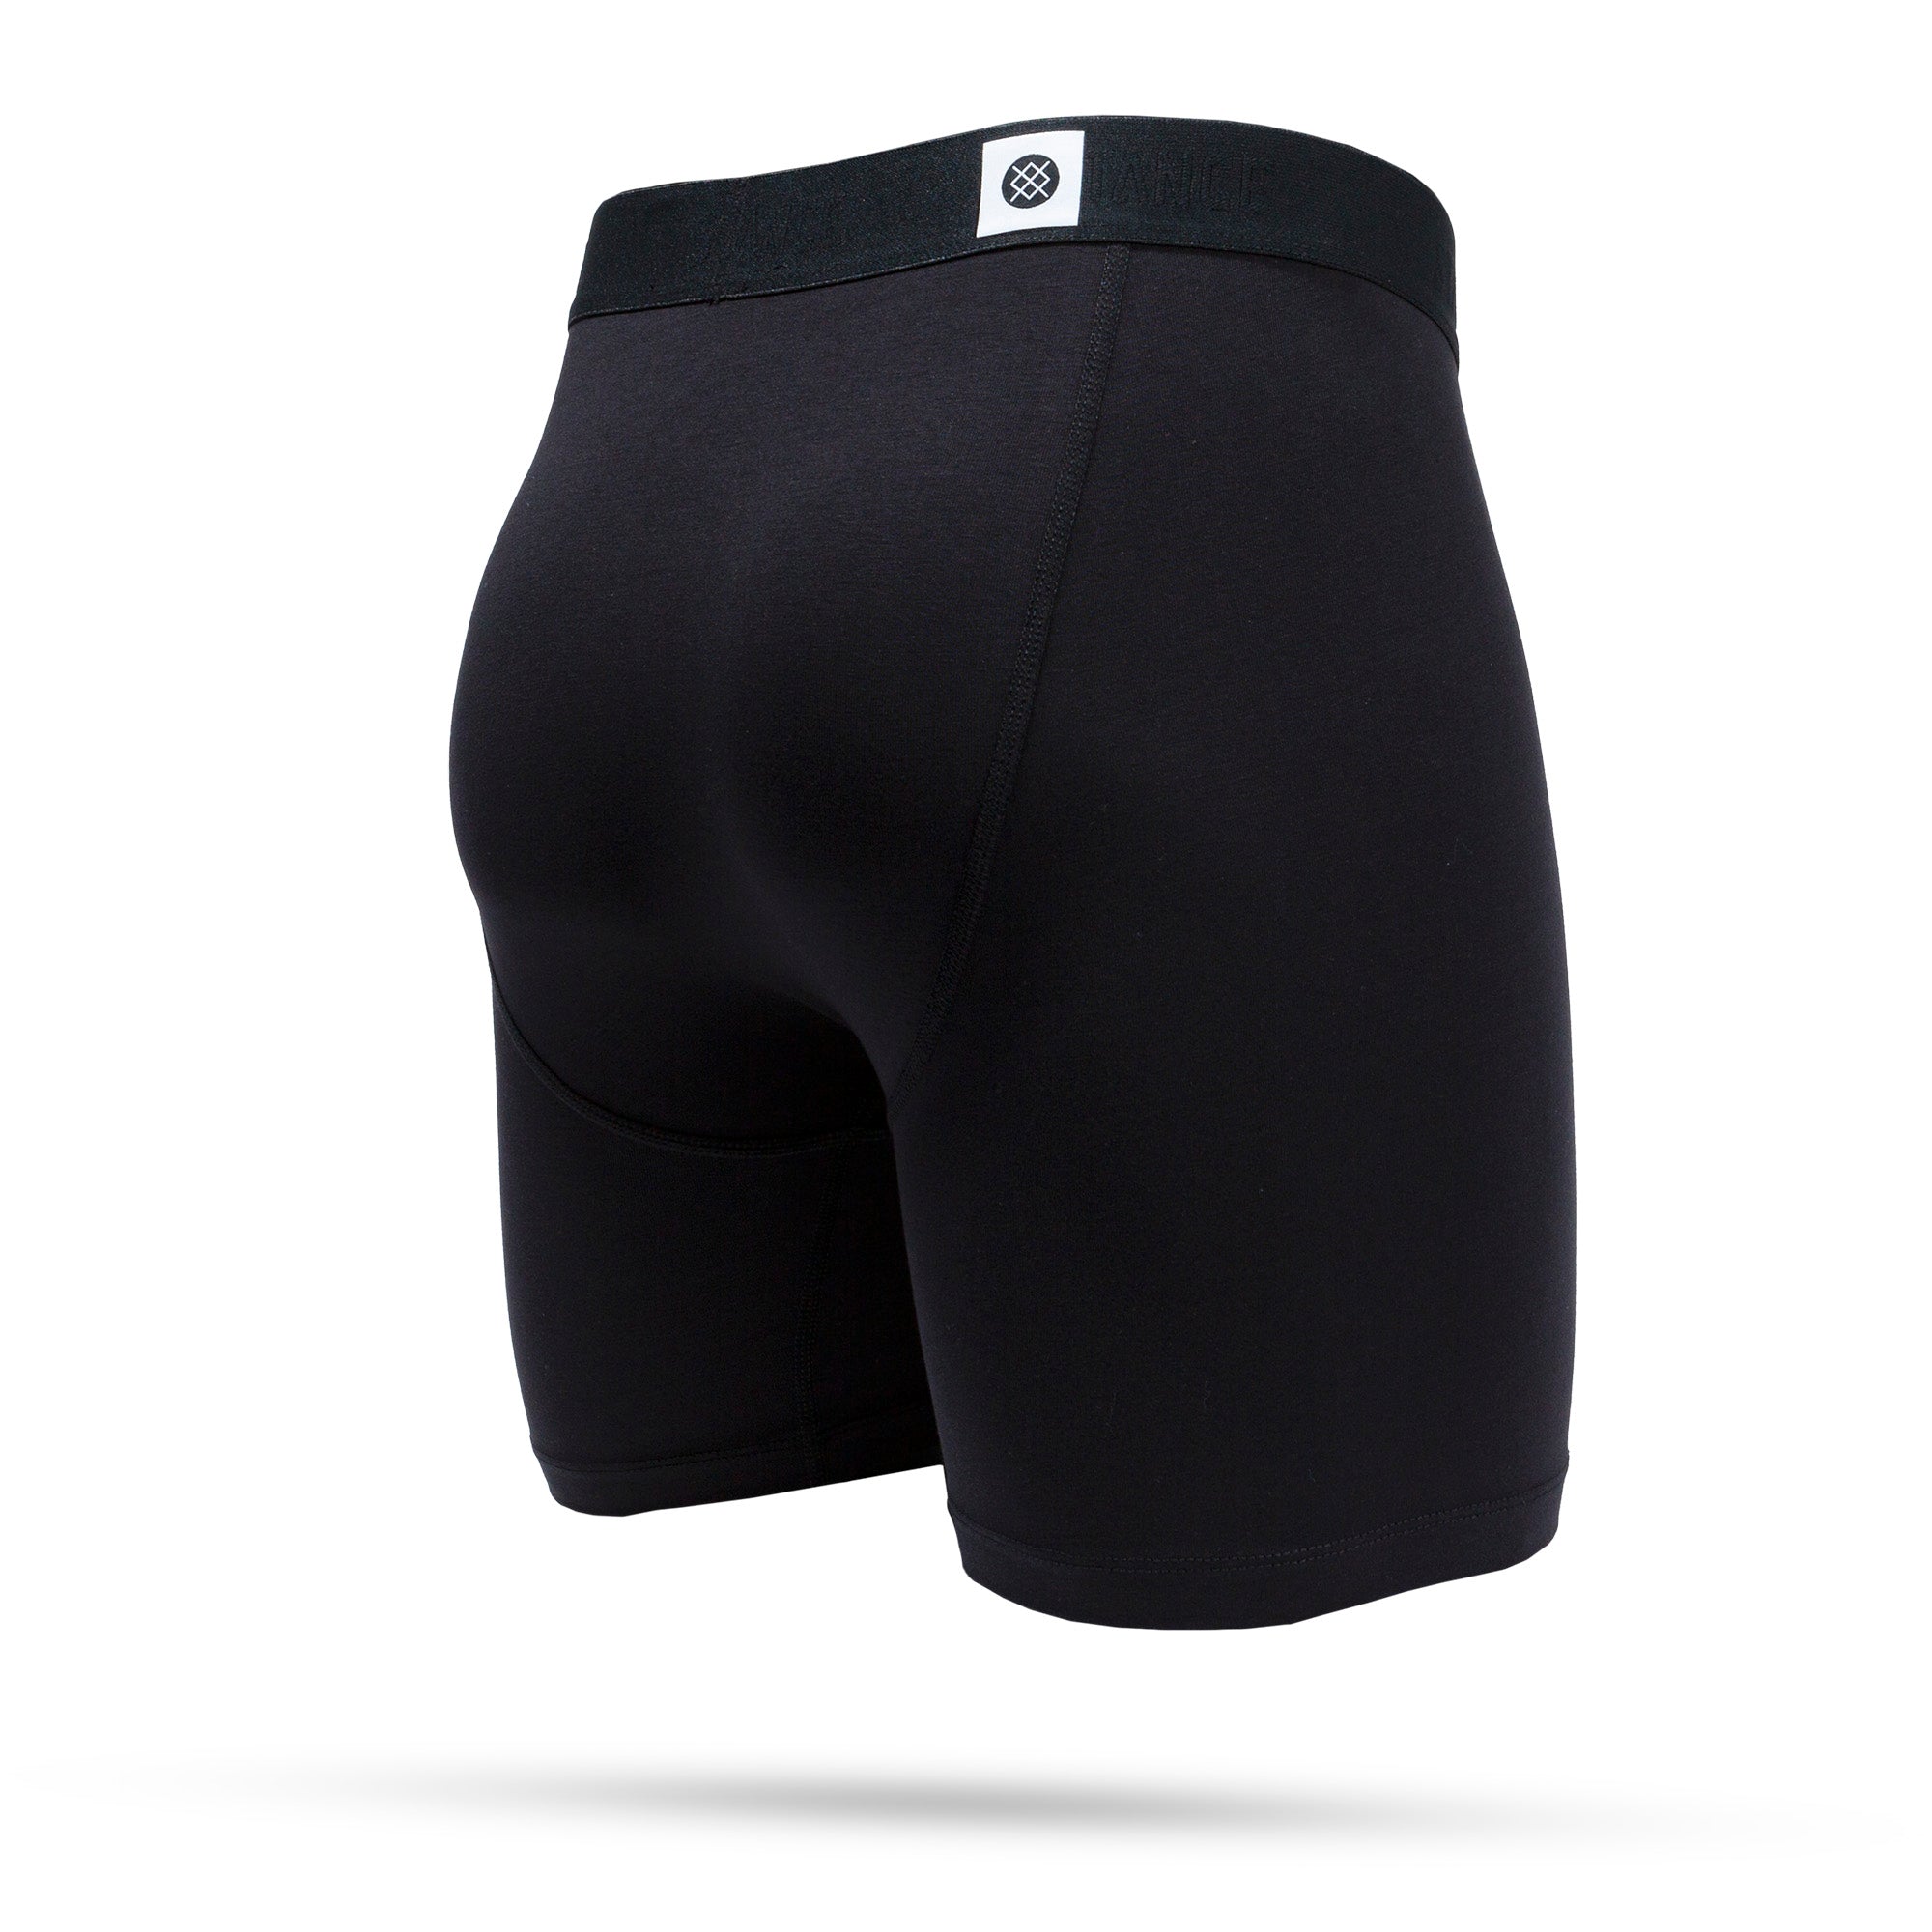 Stance Between The Lines Men Lifestyle Underwear Black M902D18Bet